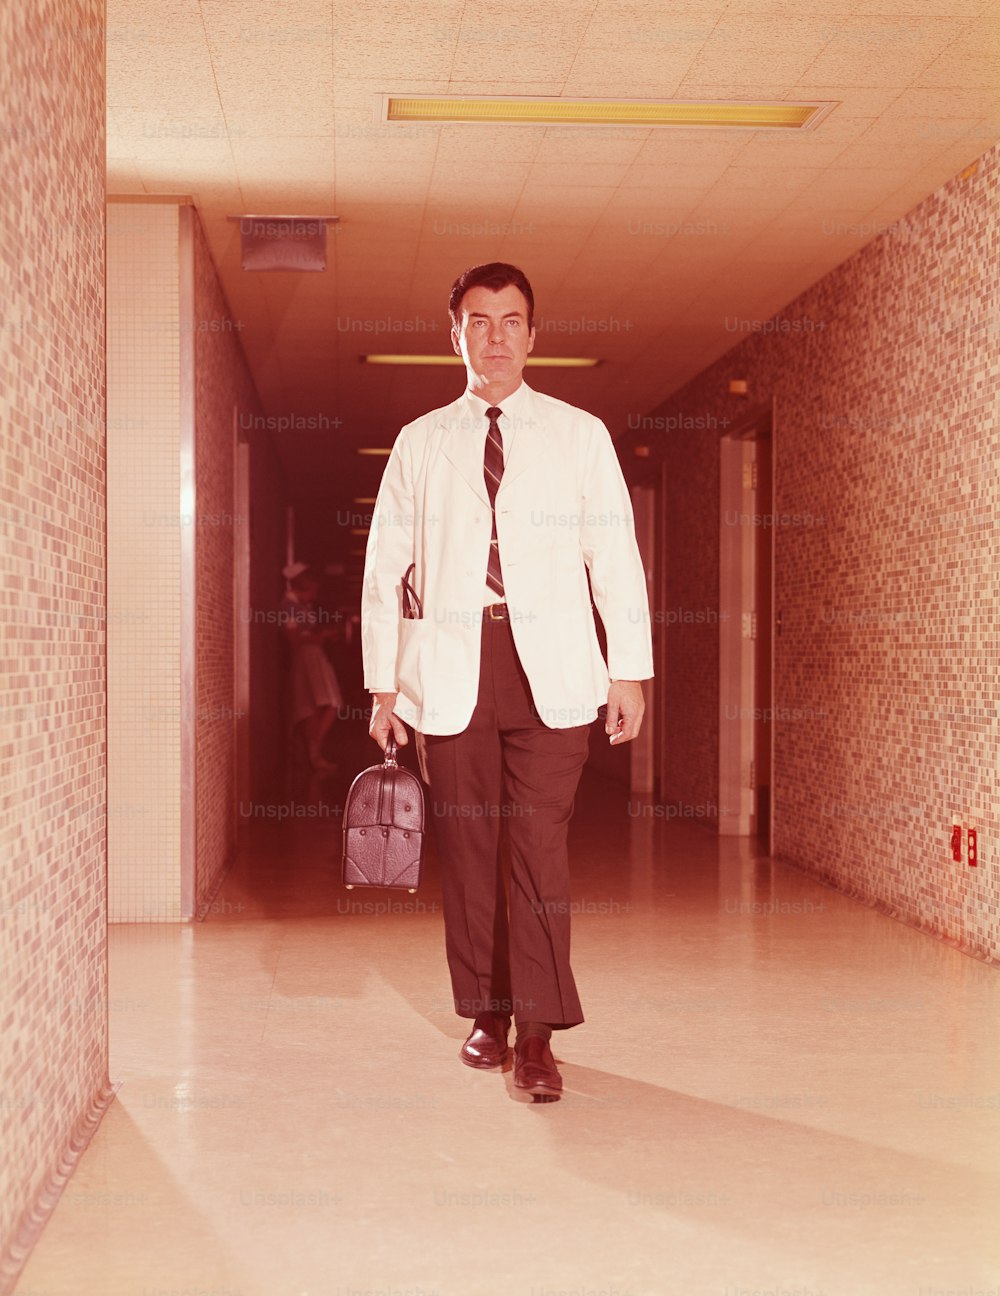 UNITED STATES - CIRCA 1960s:  Doctor walking along hospital corridor, carrying bag.